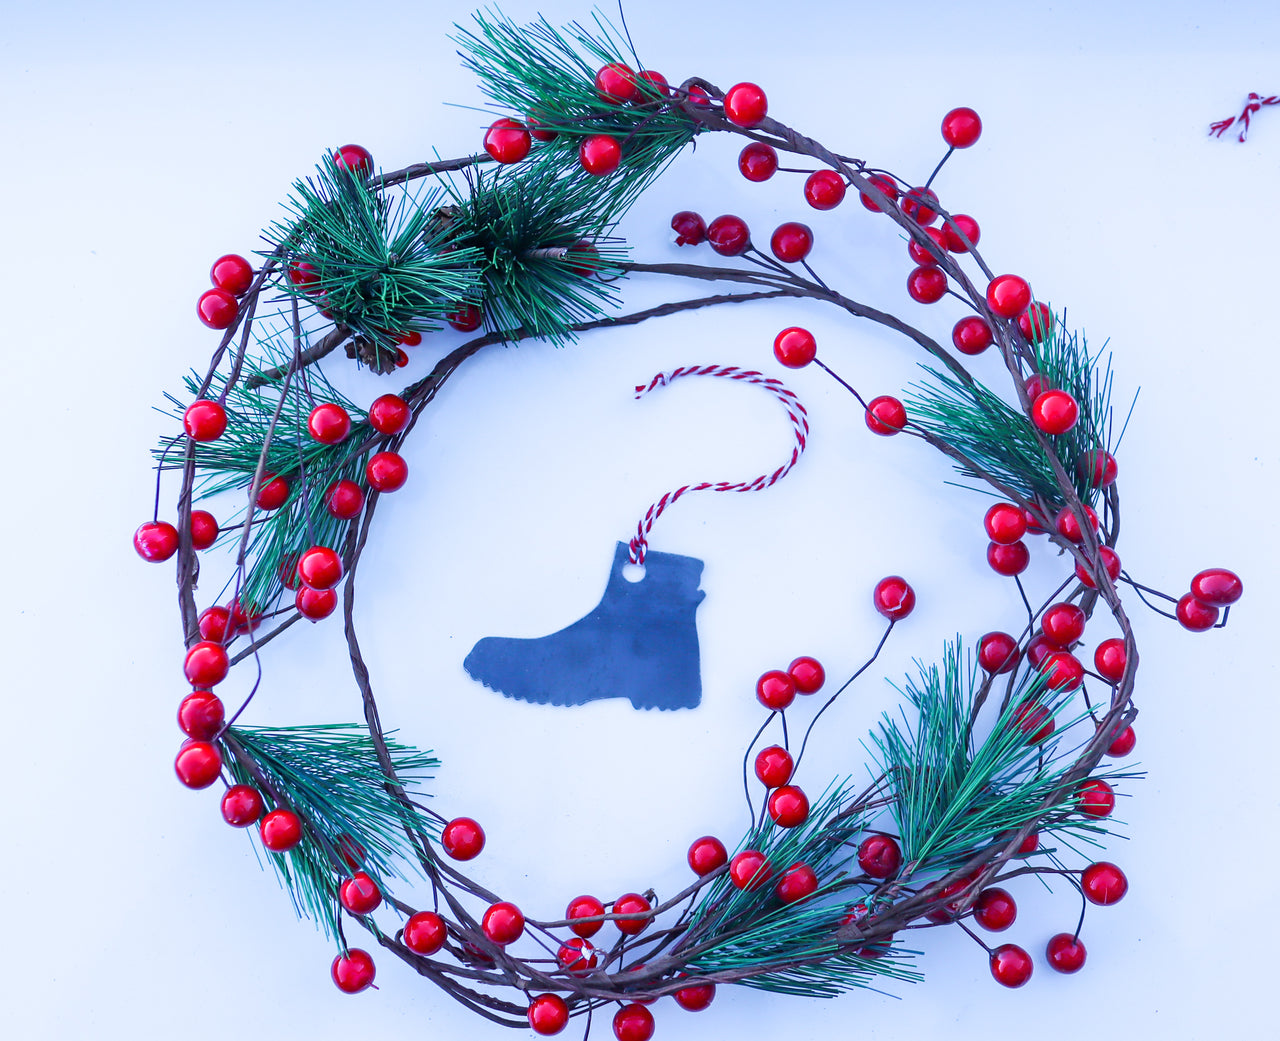 Work Boot Christmas Ornament - Holiday Stocking Stuffer Gift - Tree Home Decor